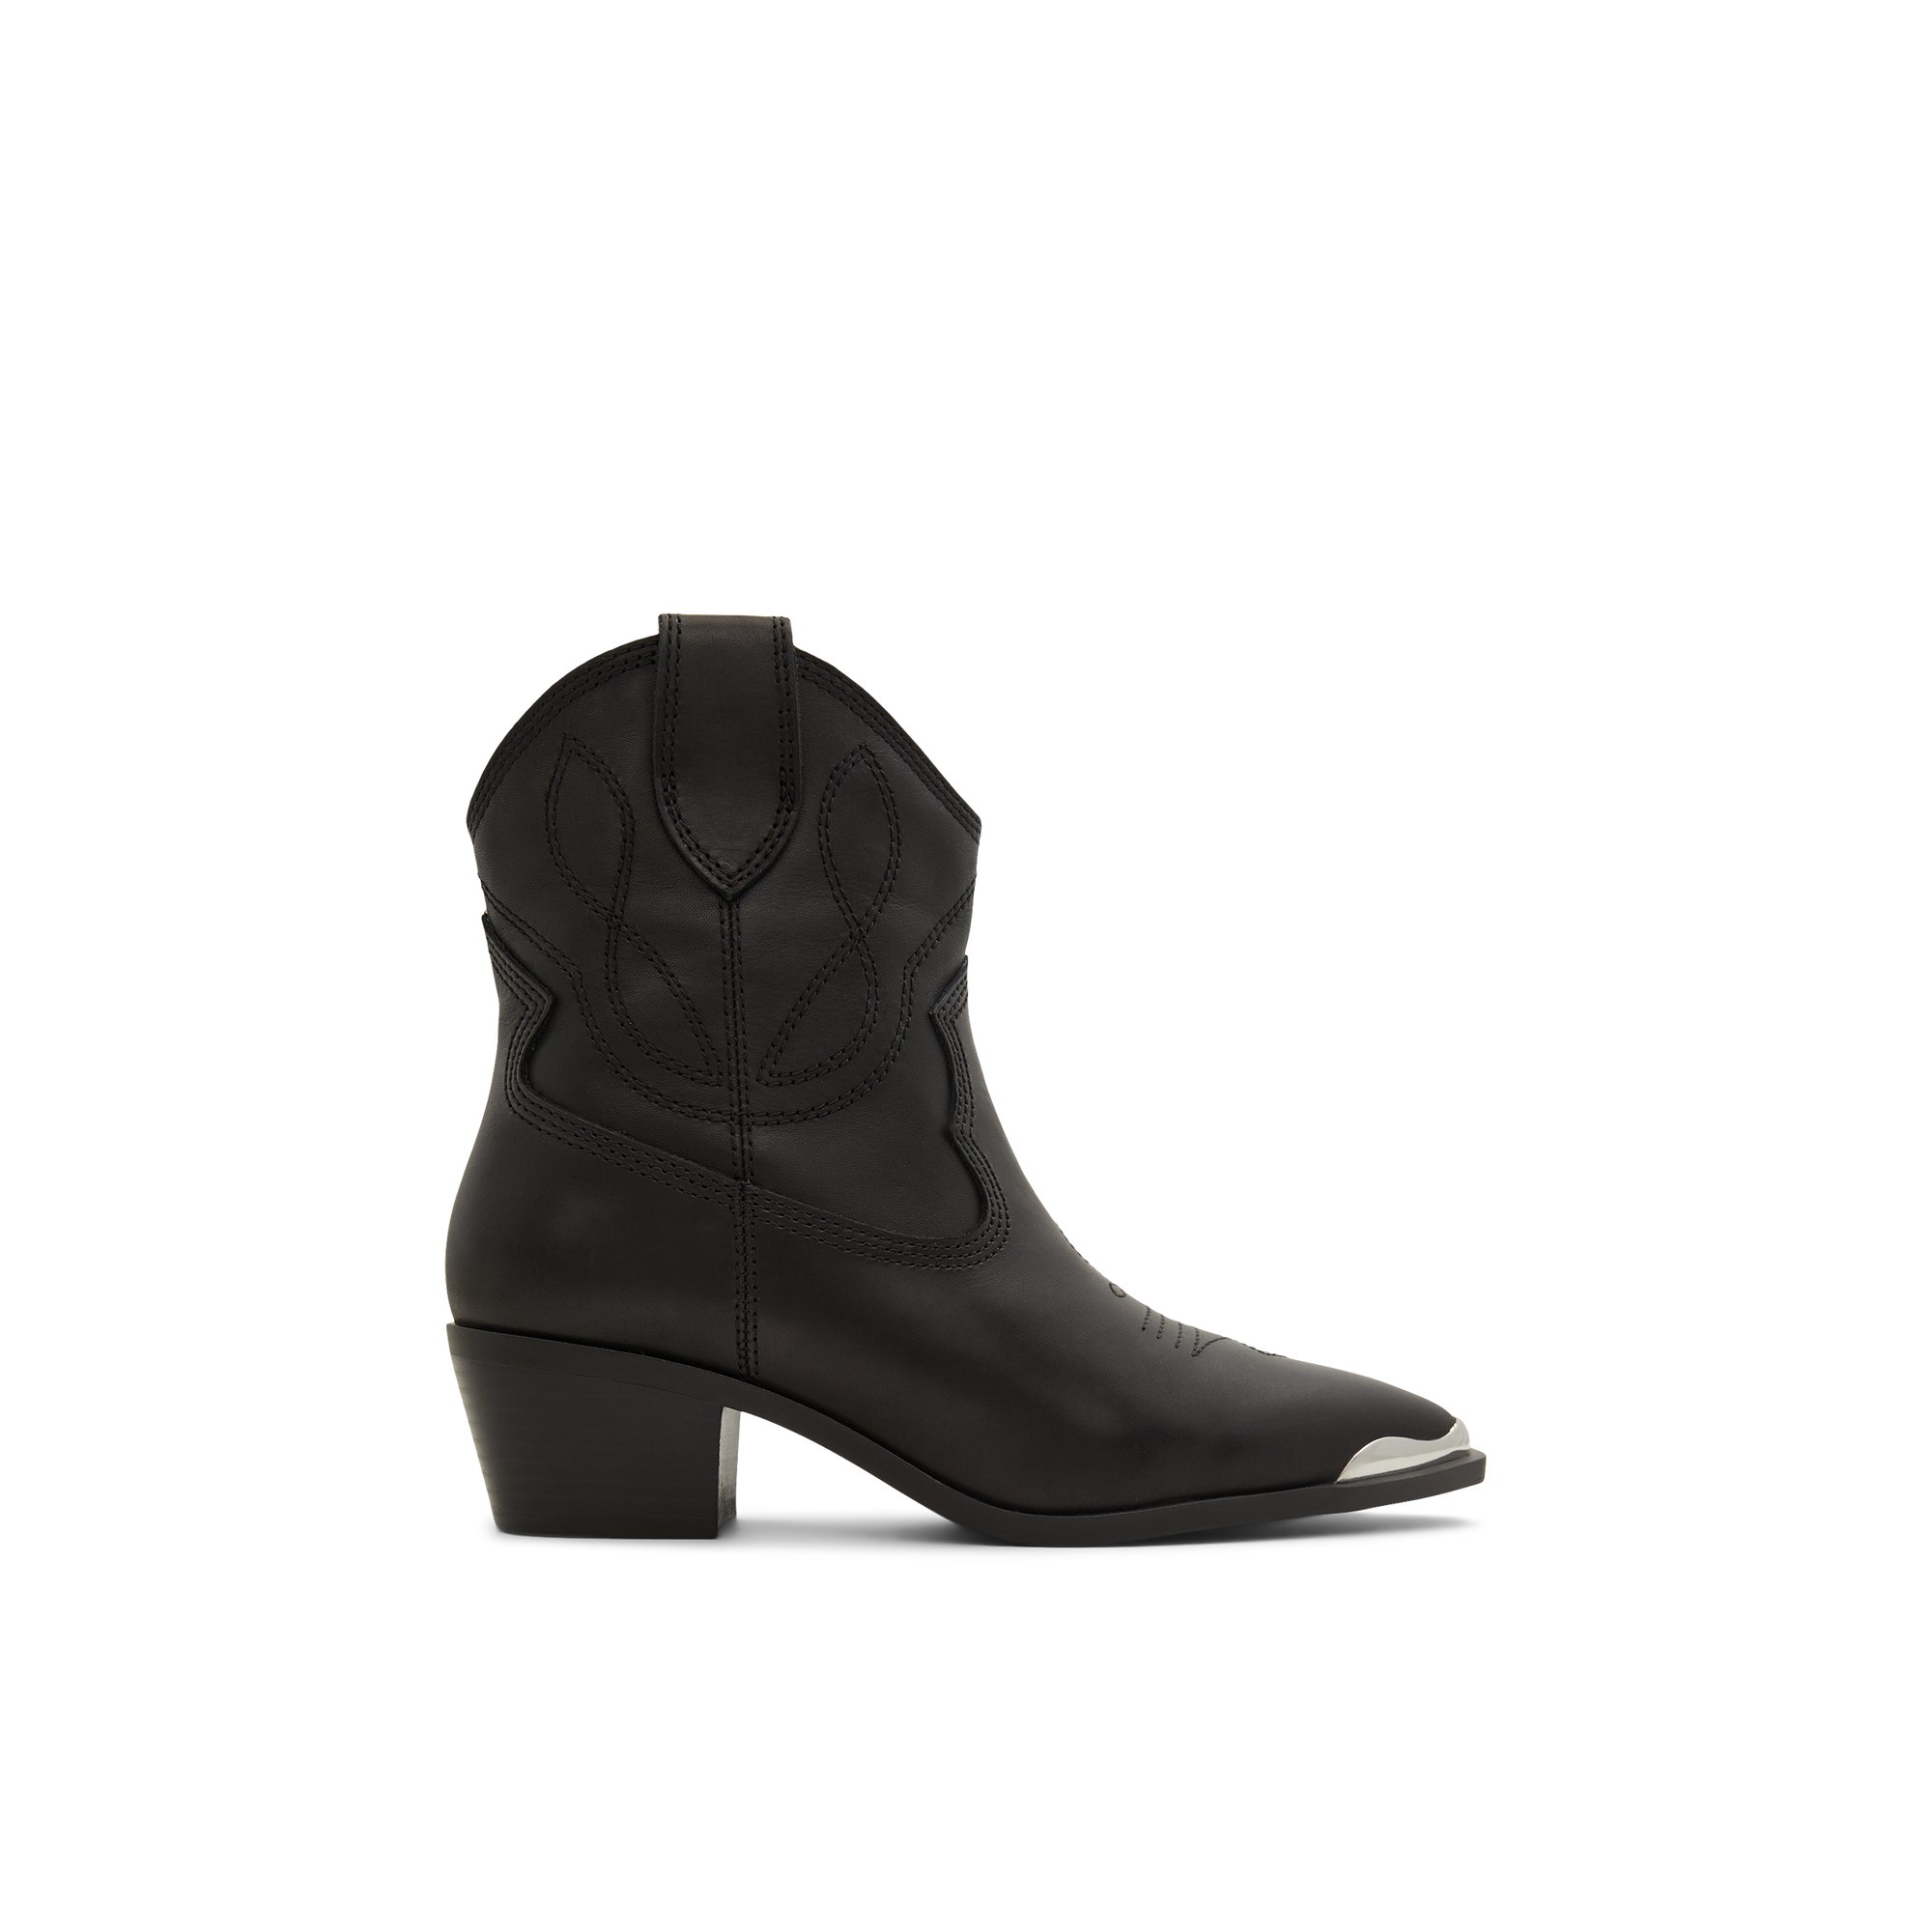 ALDO Valley - Women's Boots Ankle - Black